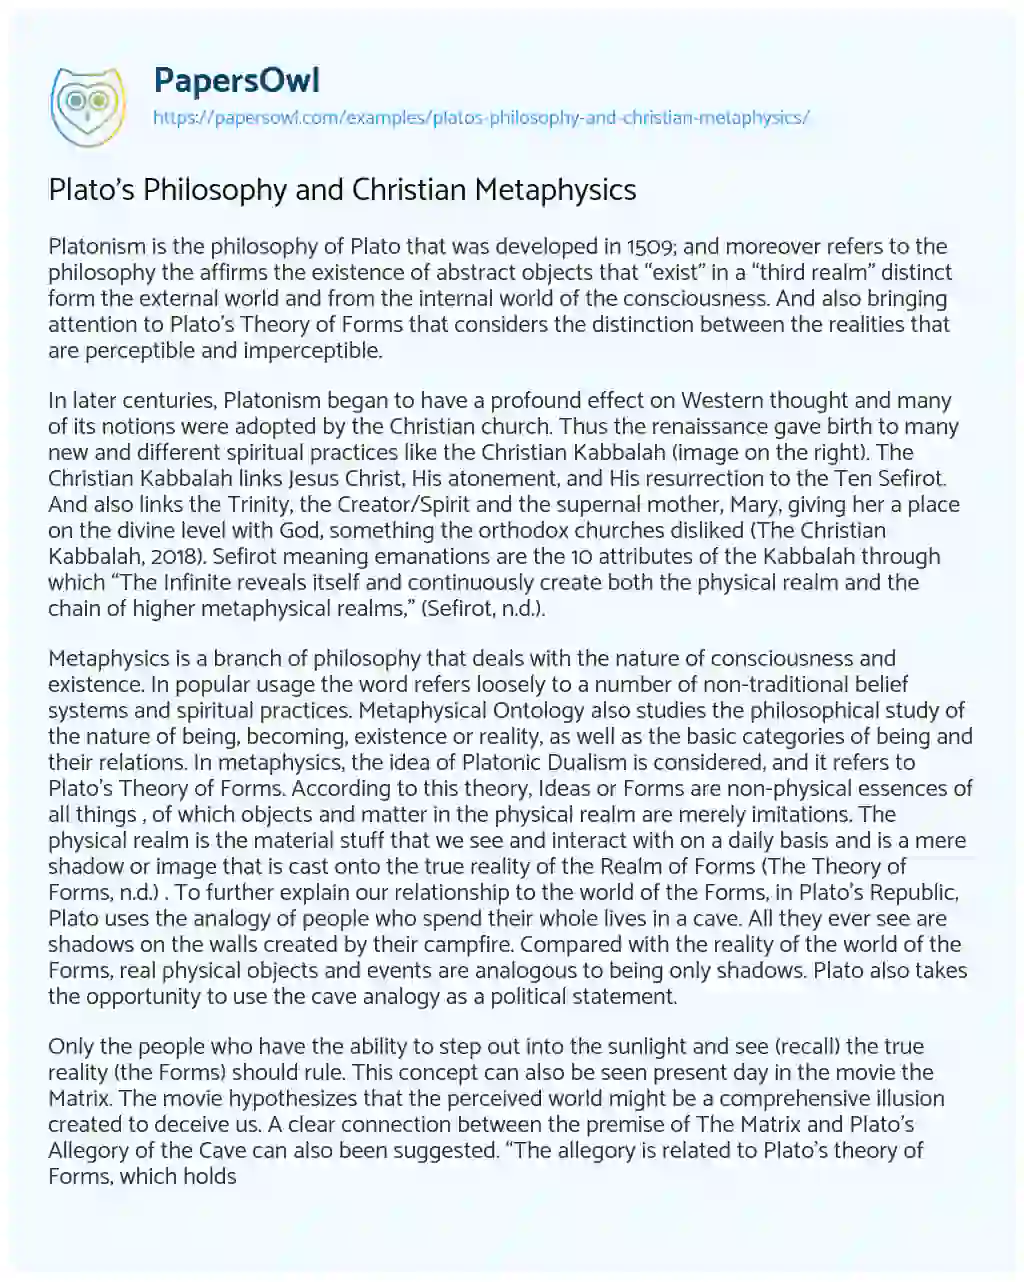 Essay on Plato’s Philosophy and Christian Metaphysics